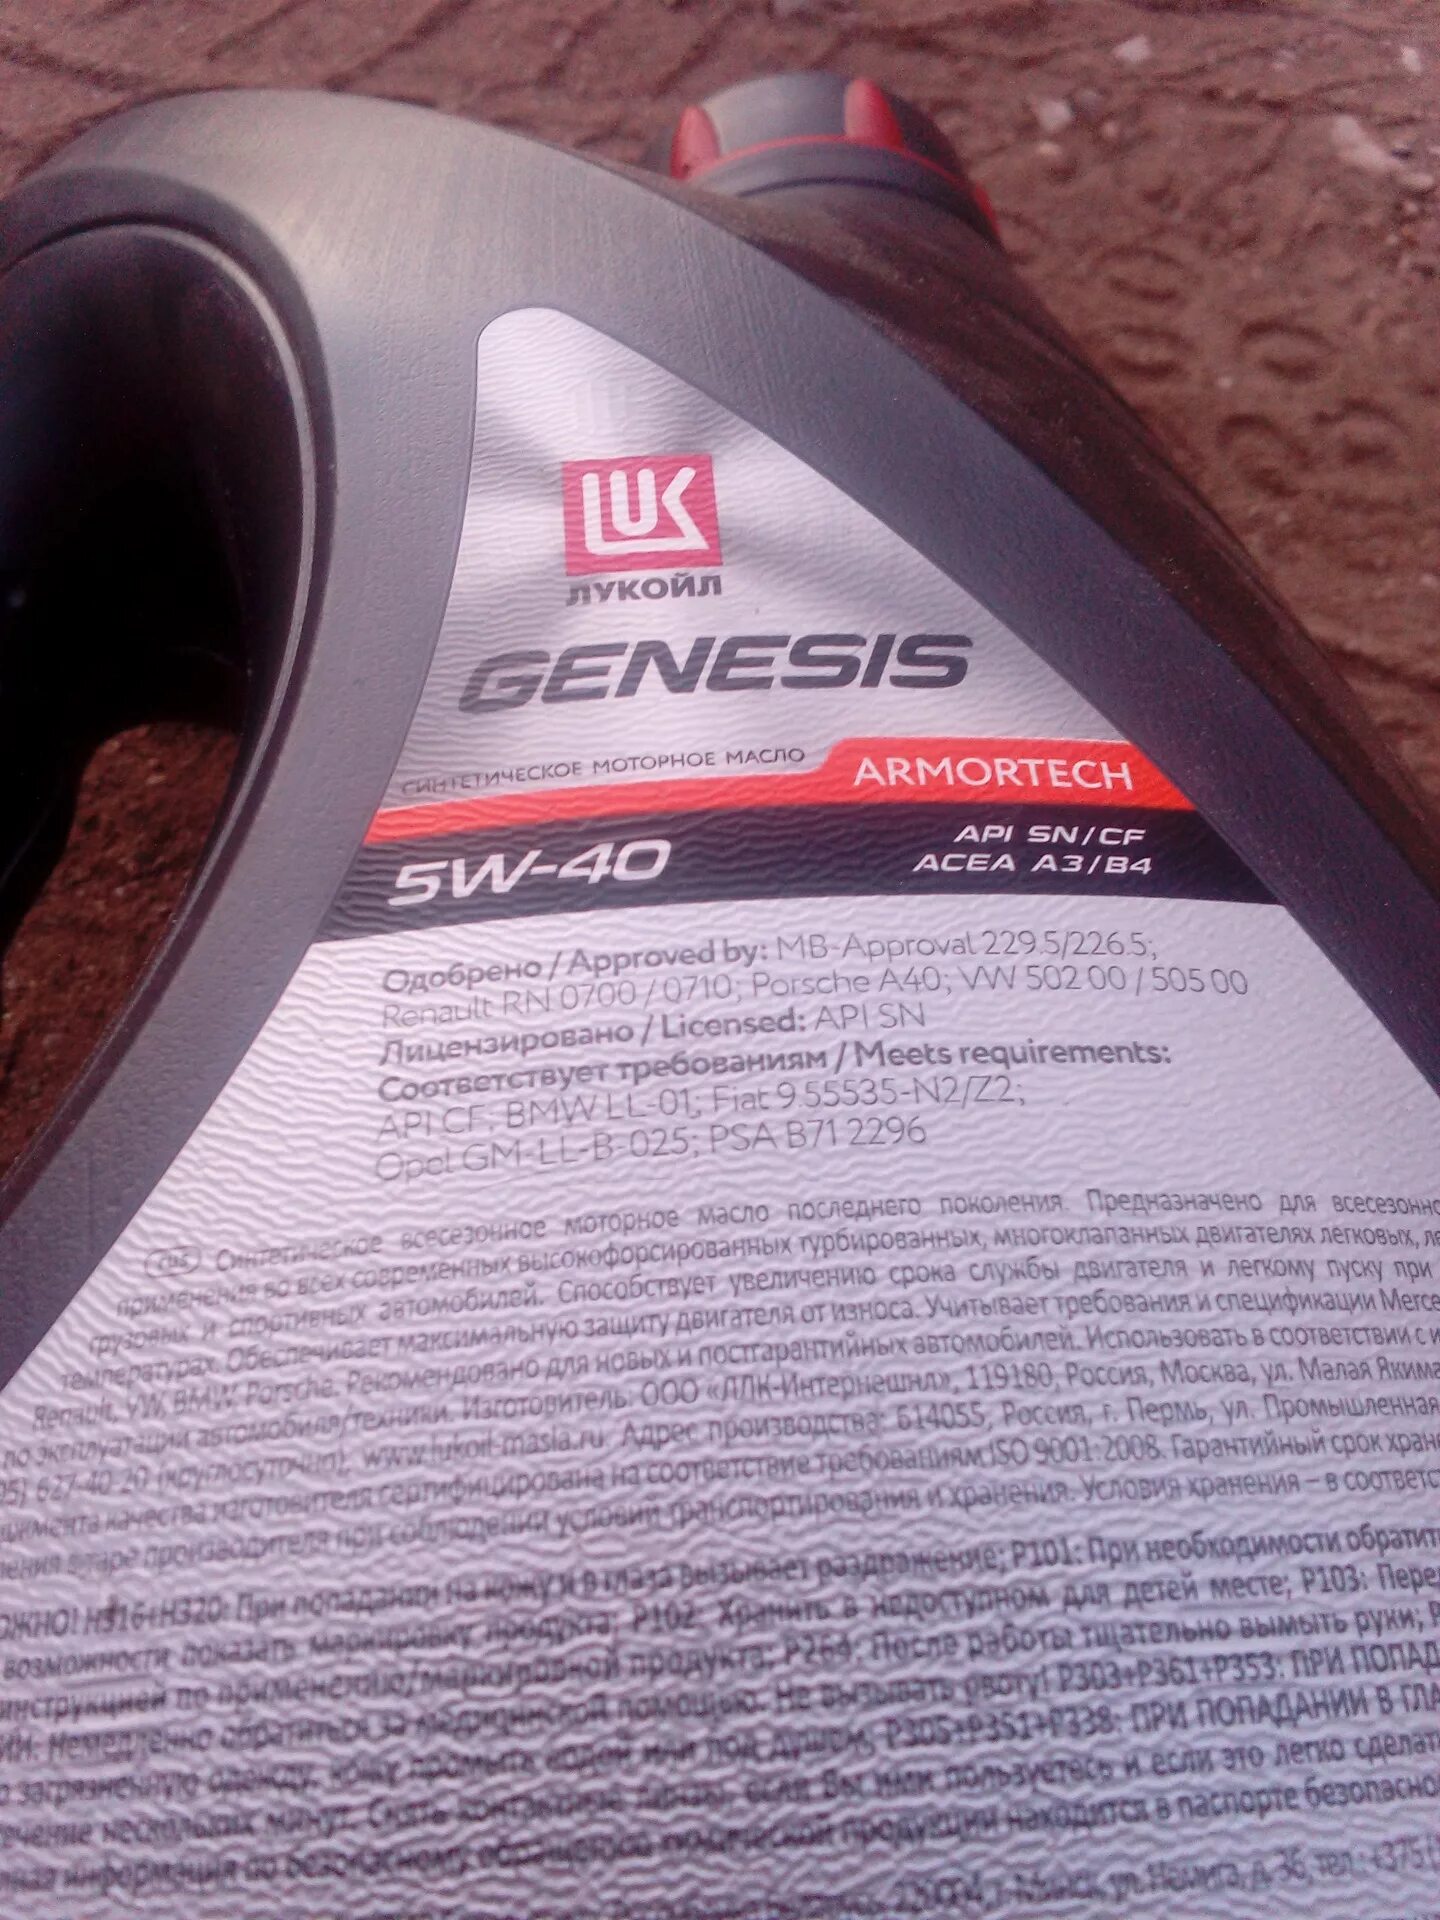 Характеристики масла лукойл genesis. Audi a6 Lukoil Genesis. E60 Lukoil Genesis. Масло "Лукойл Genesis Armortech желтая этикетка. Этикетки масла Лукойл Дженезис.